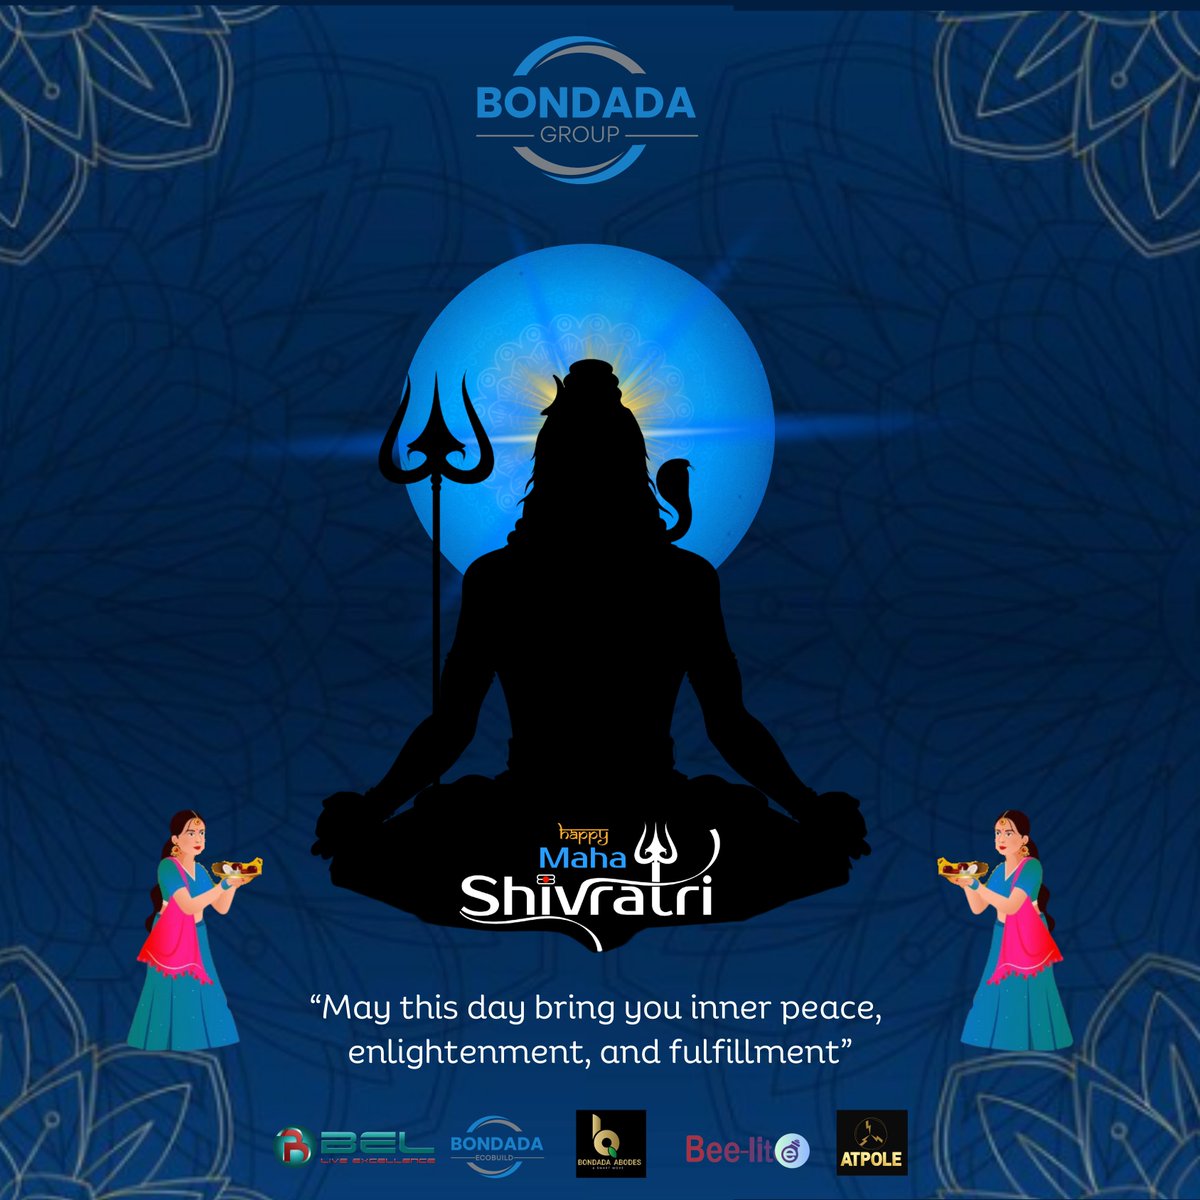 'May this day bring you inner peace, enlightenment, and fulfillment.' 🙏✨ Happy MahaShivaratri to all from Bondada Group! #MahaShivaratri #FestivalGreetings #BondadaGroup🌟